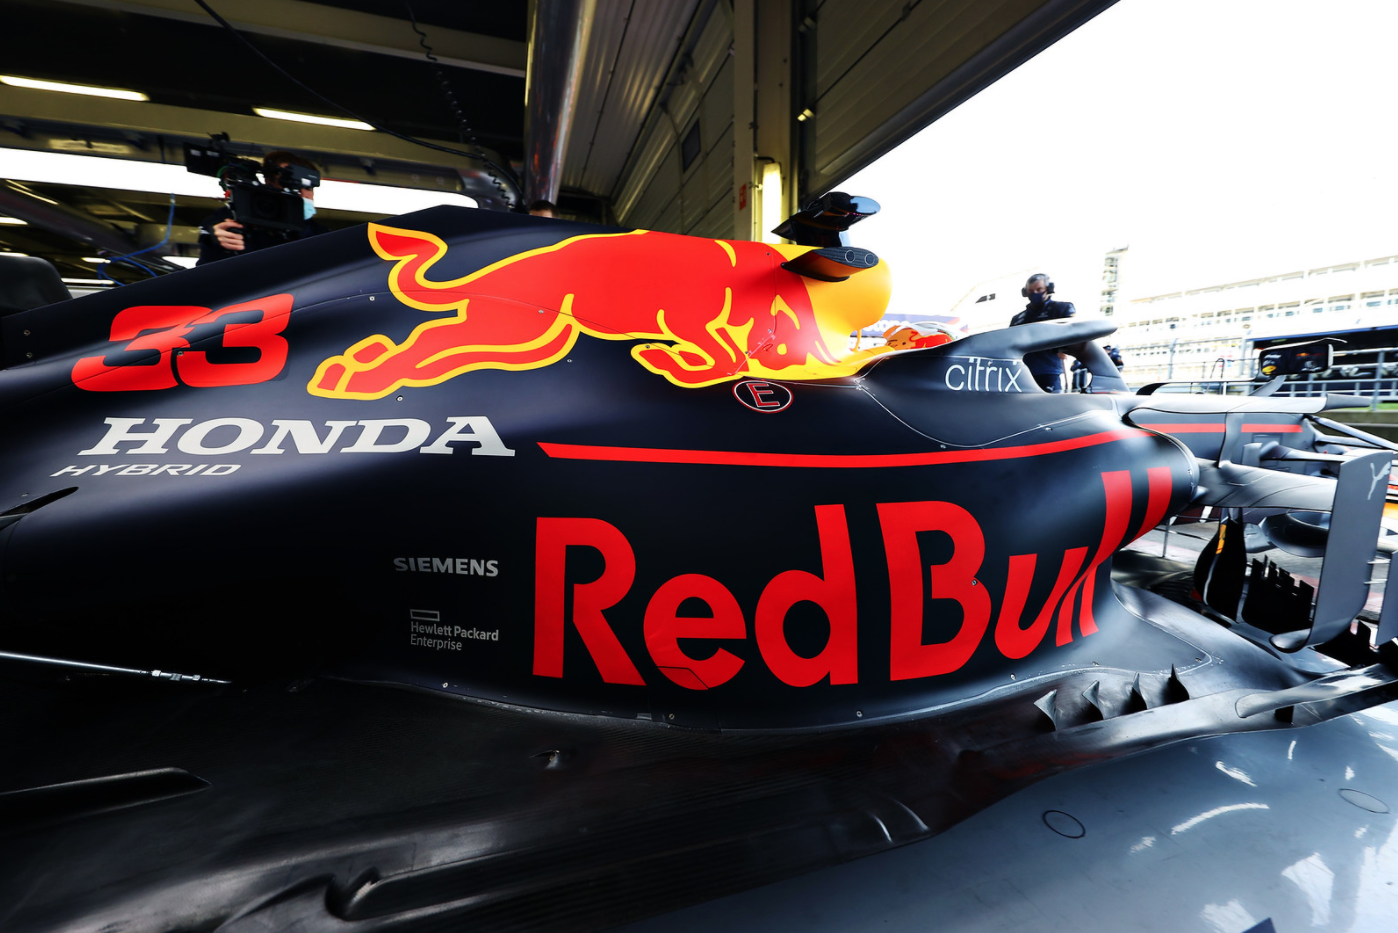 Hpe Simplivity Powers Red Bull Racing Honda S Sprint To The Edge Siliconangle